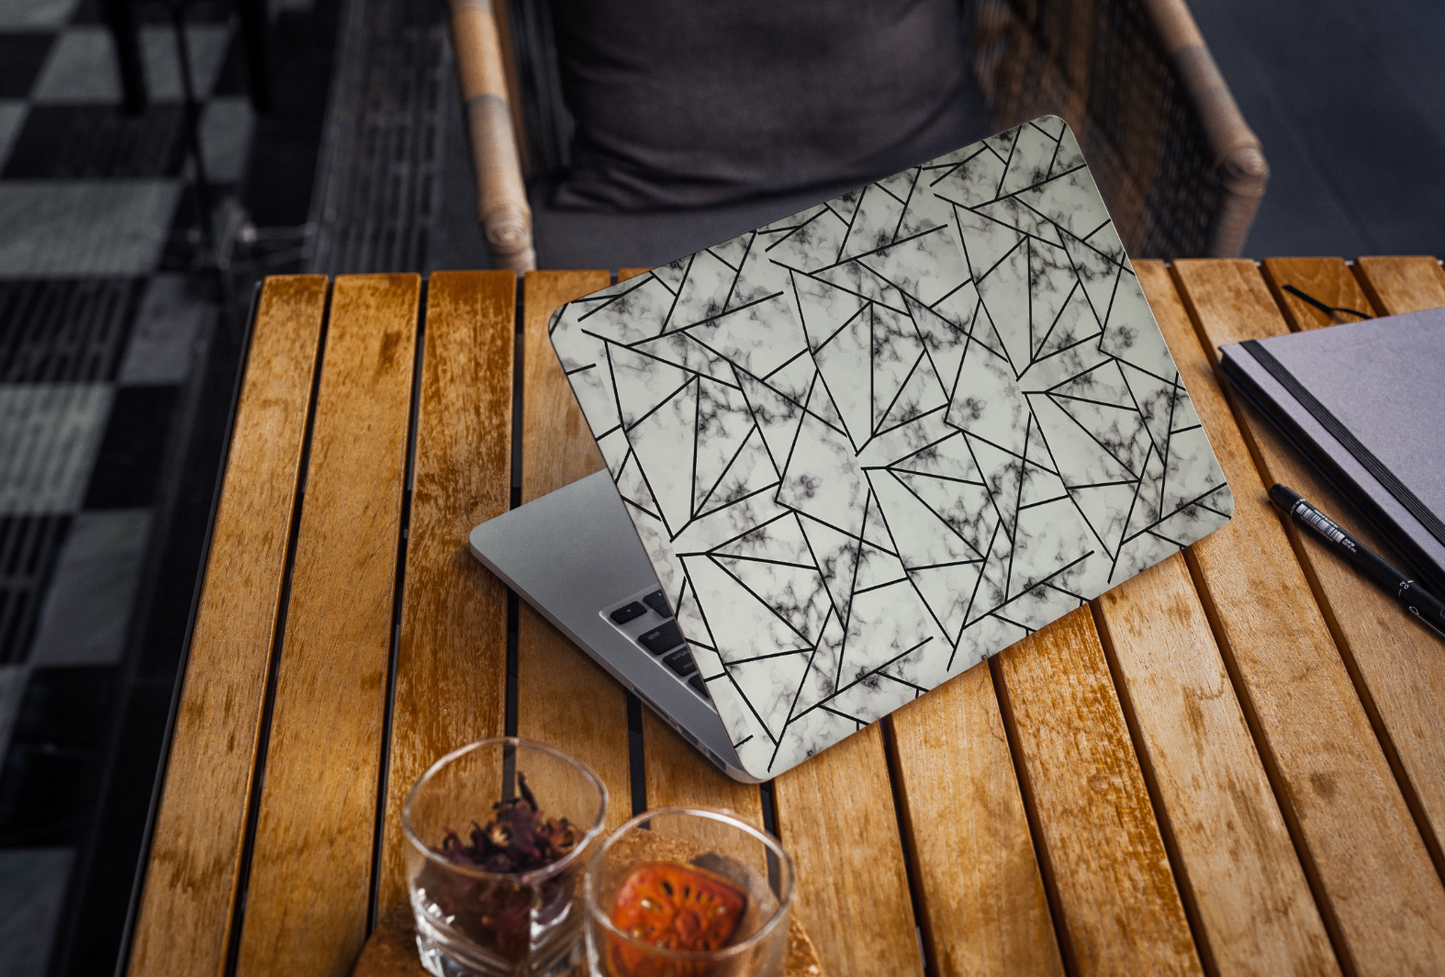 Ceramic Marble 3D Textured Laptop Skin